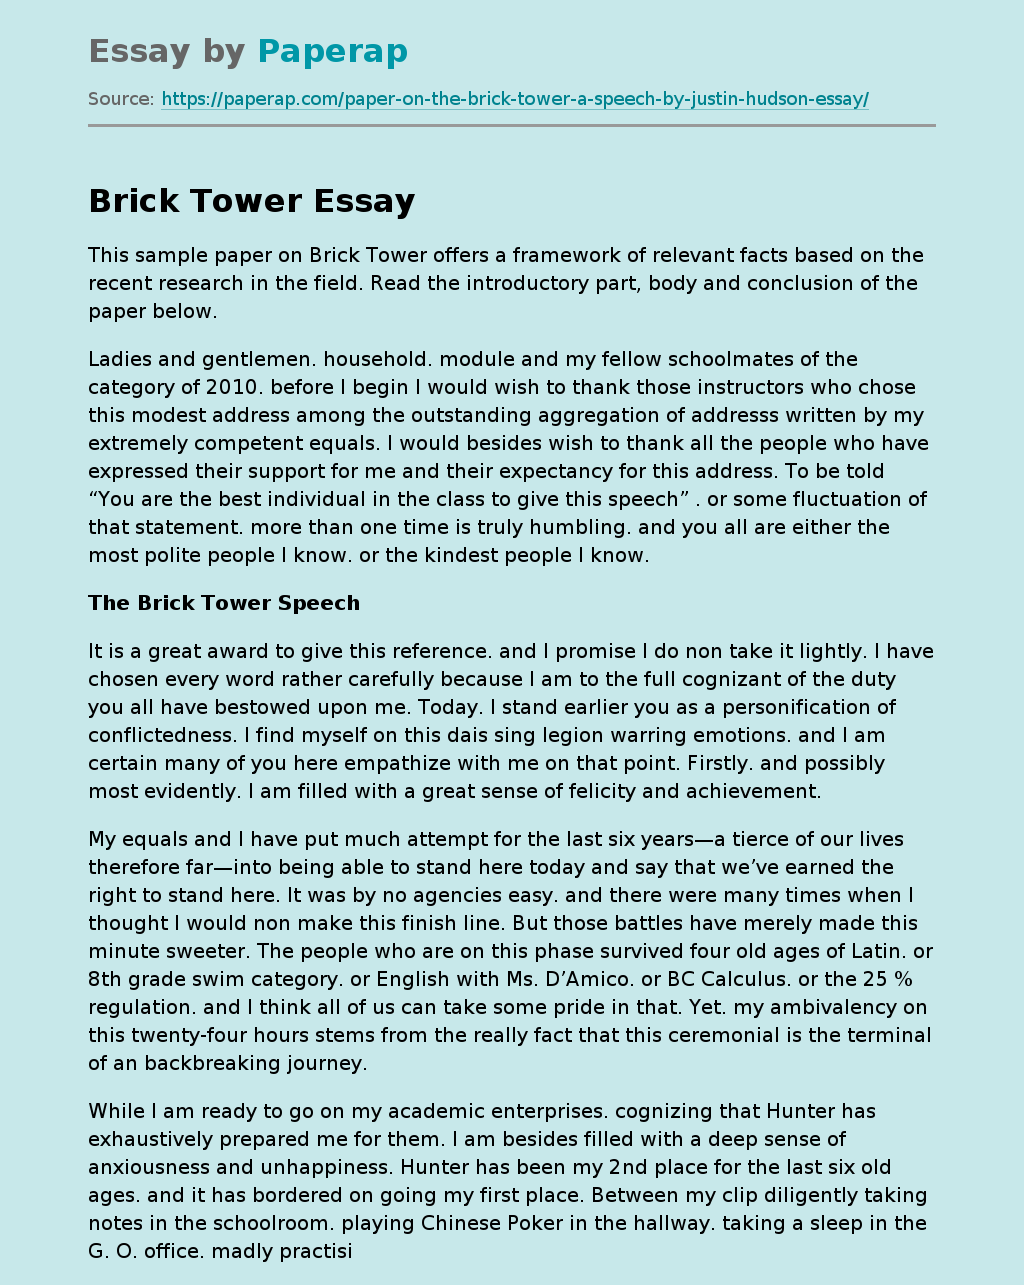 The Brick Tower Speech